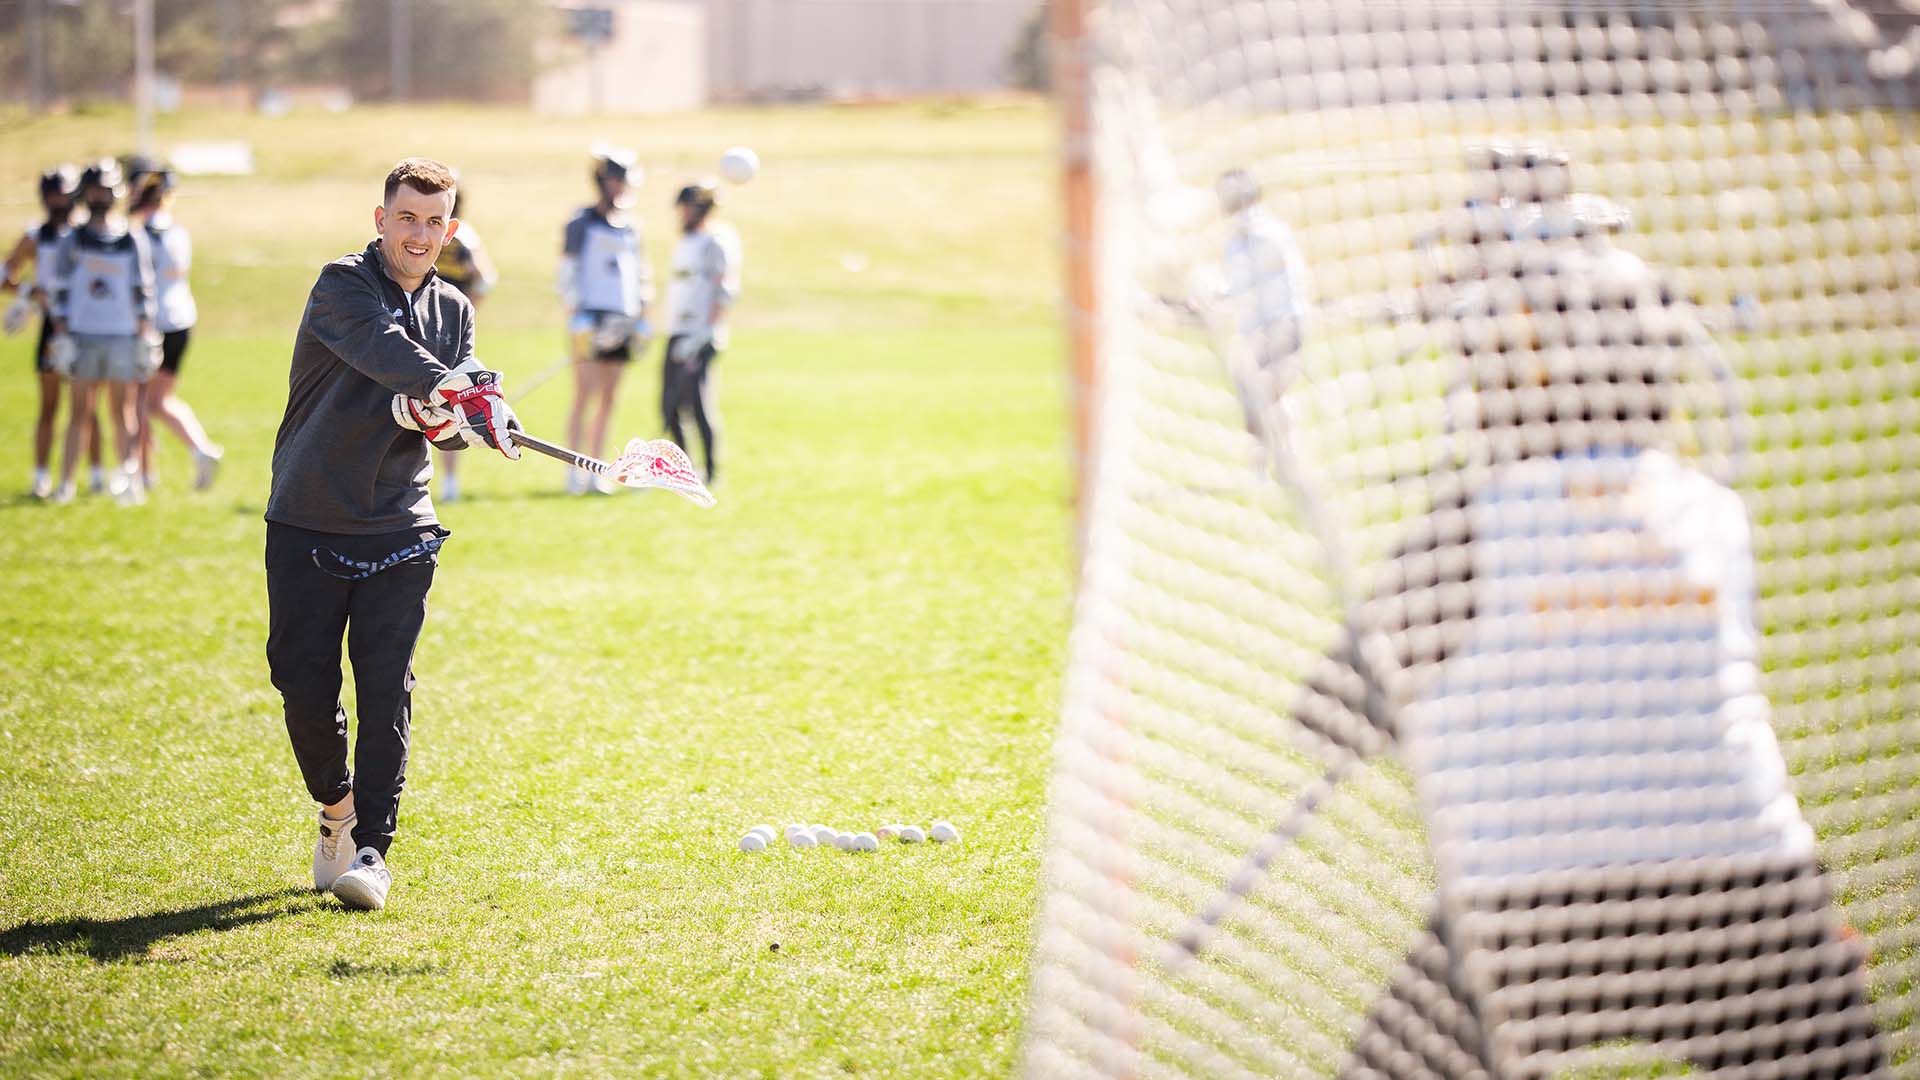 Changemaker: Award-winning student serves his lacrosse and teaching communities